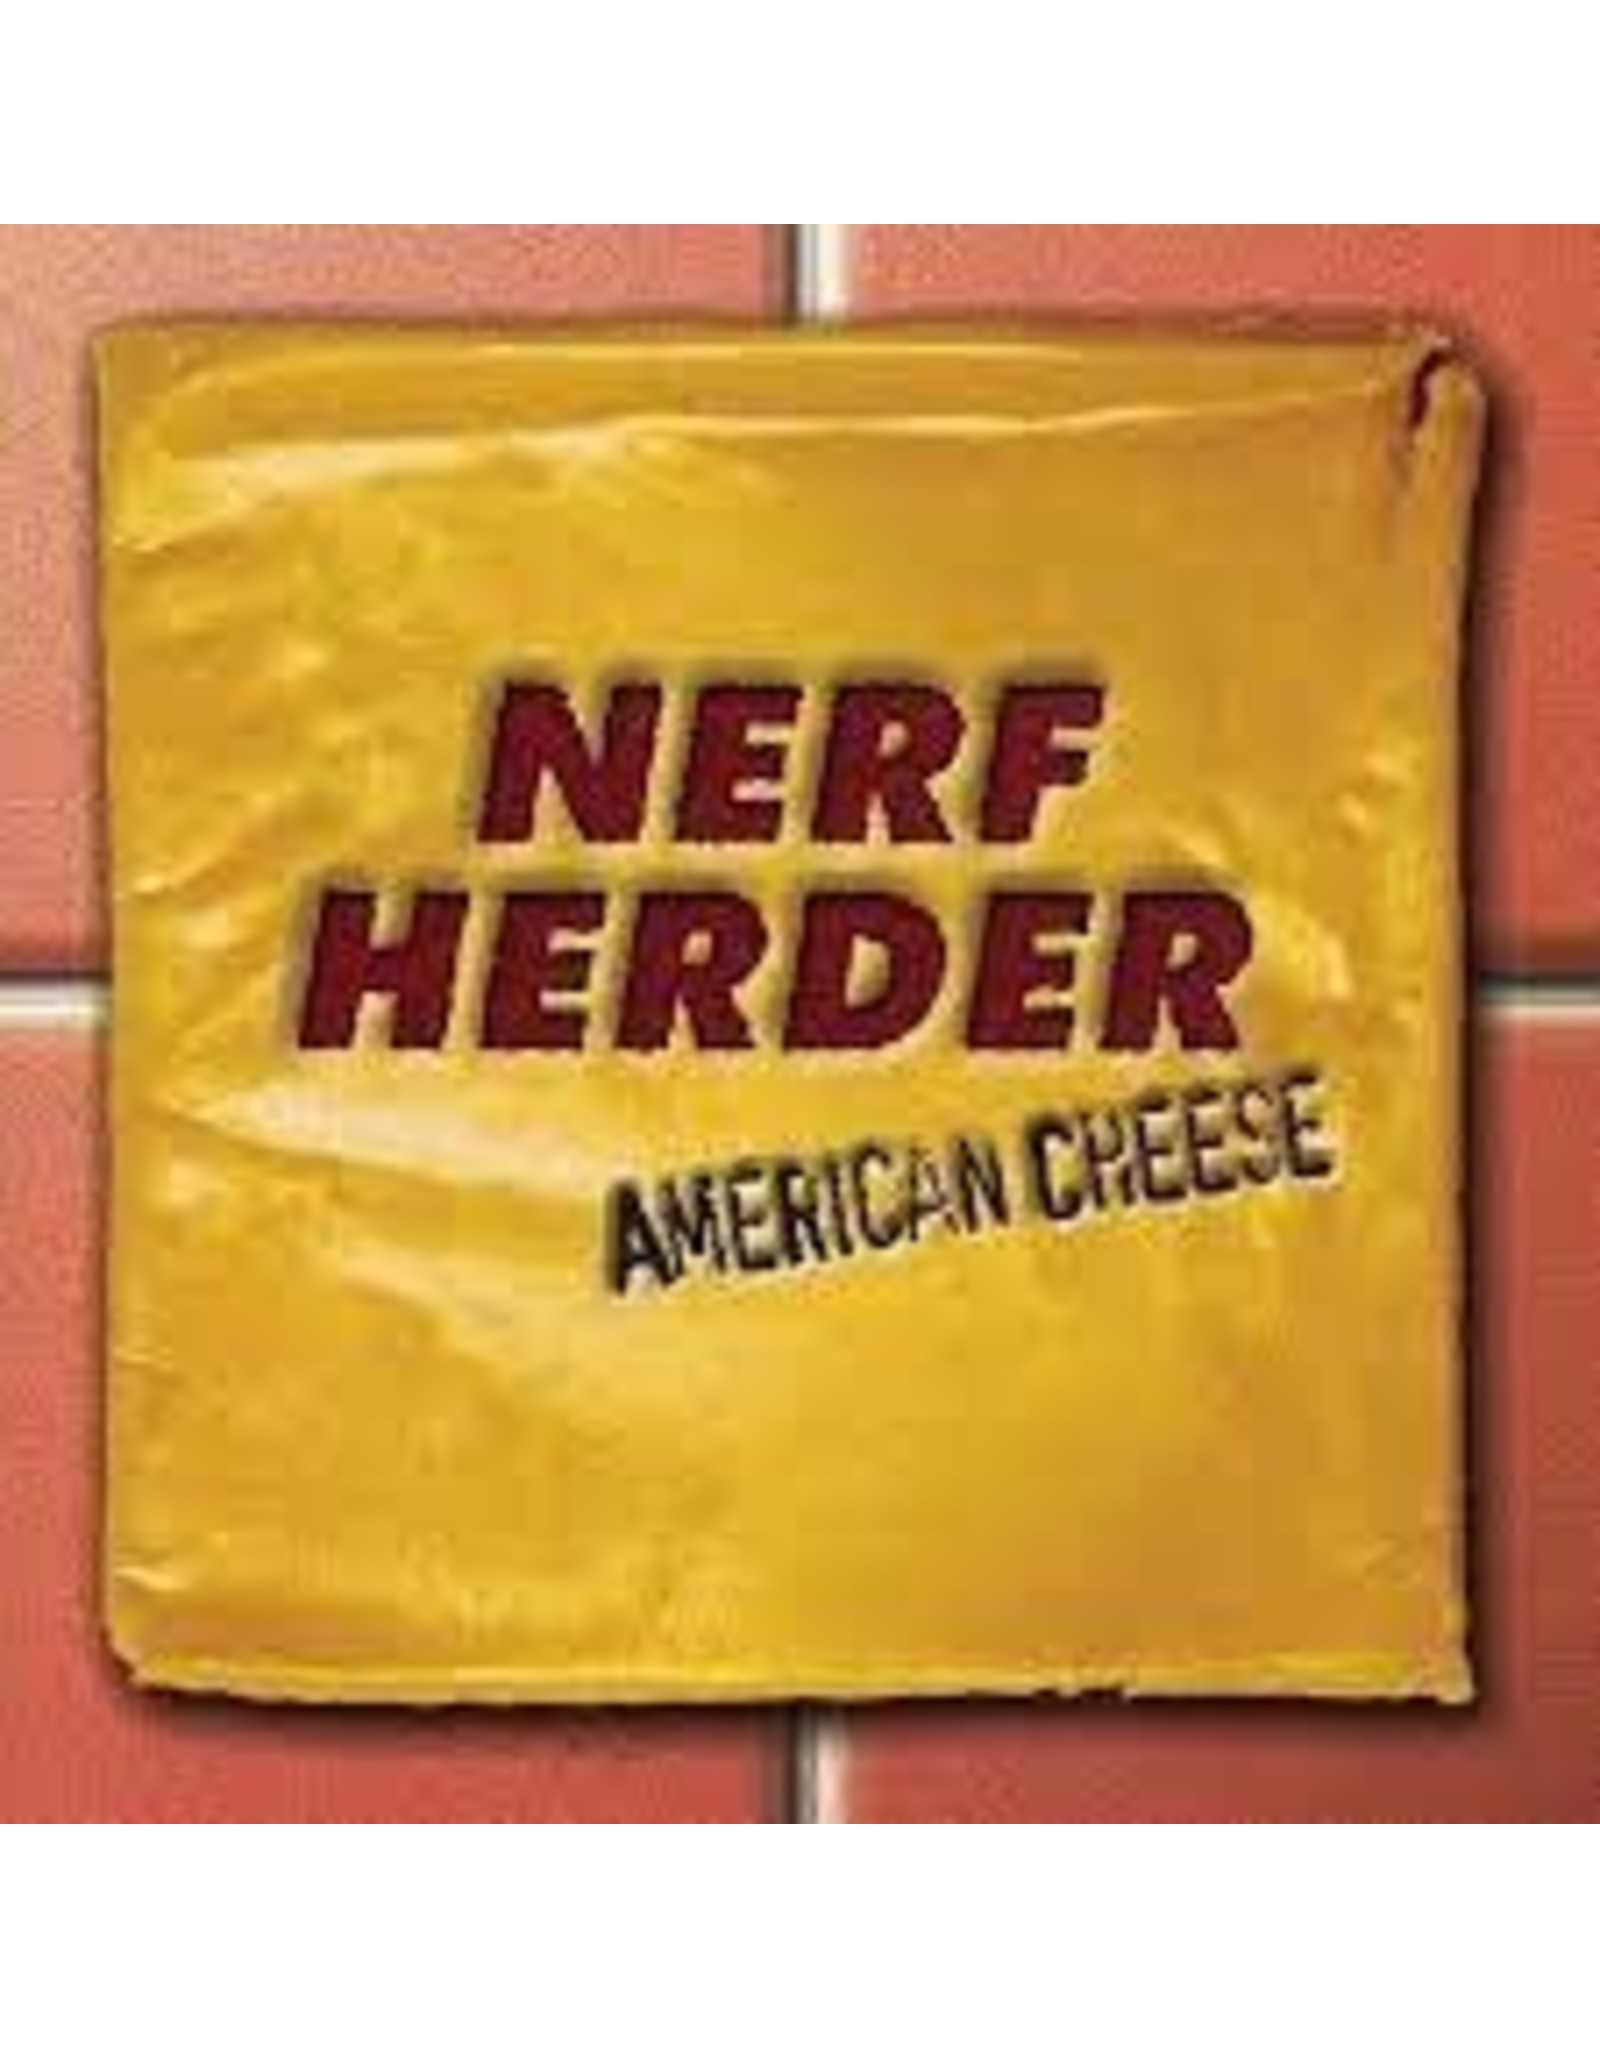 Nerf Herder - American Cheese LP